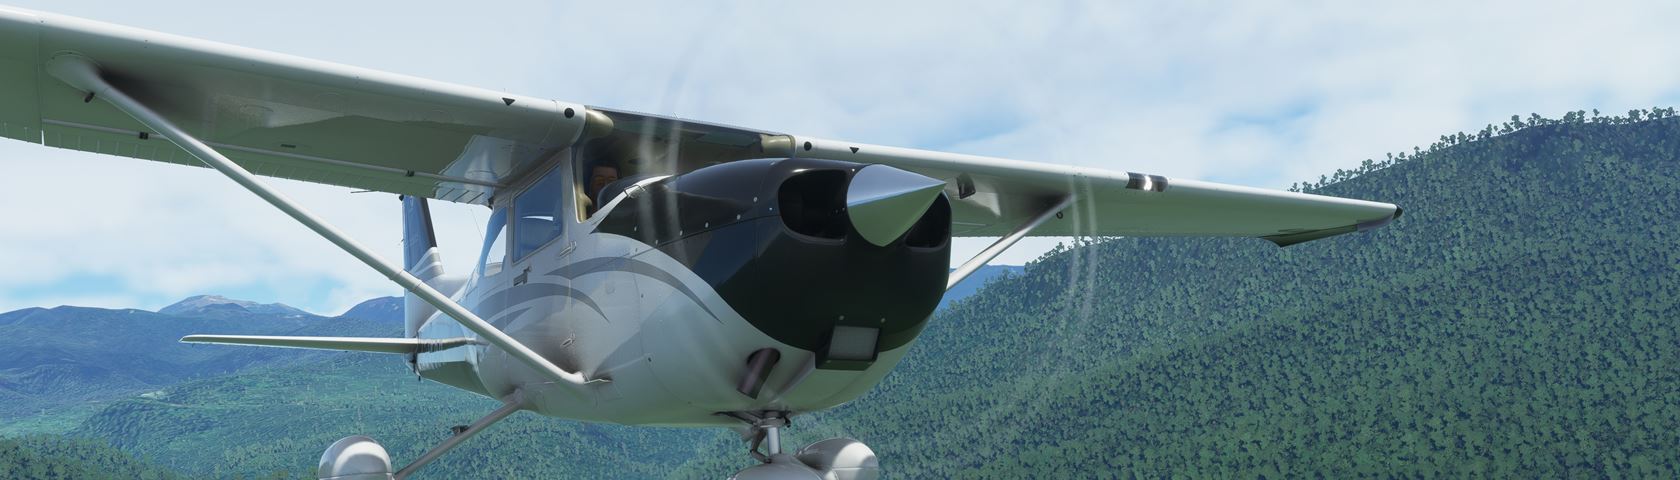 FS2020 Cessna 150